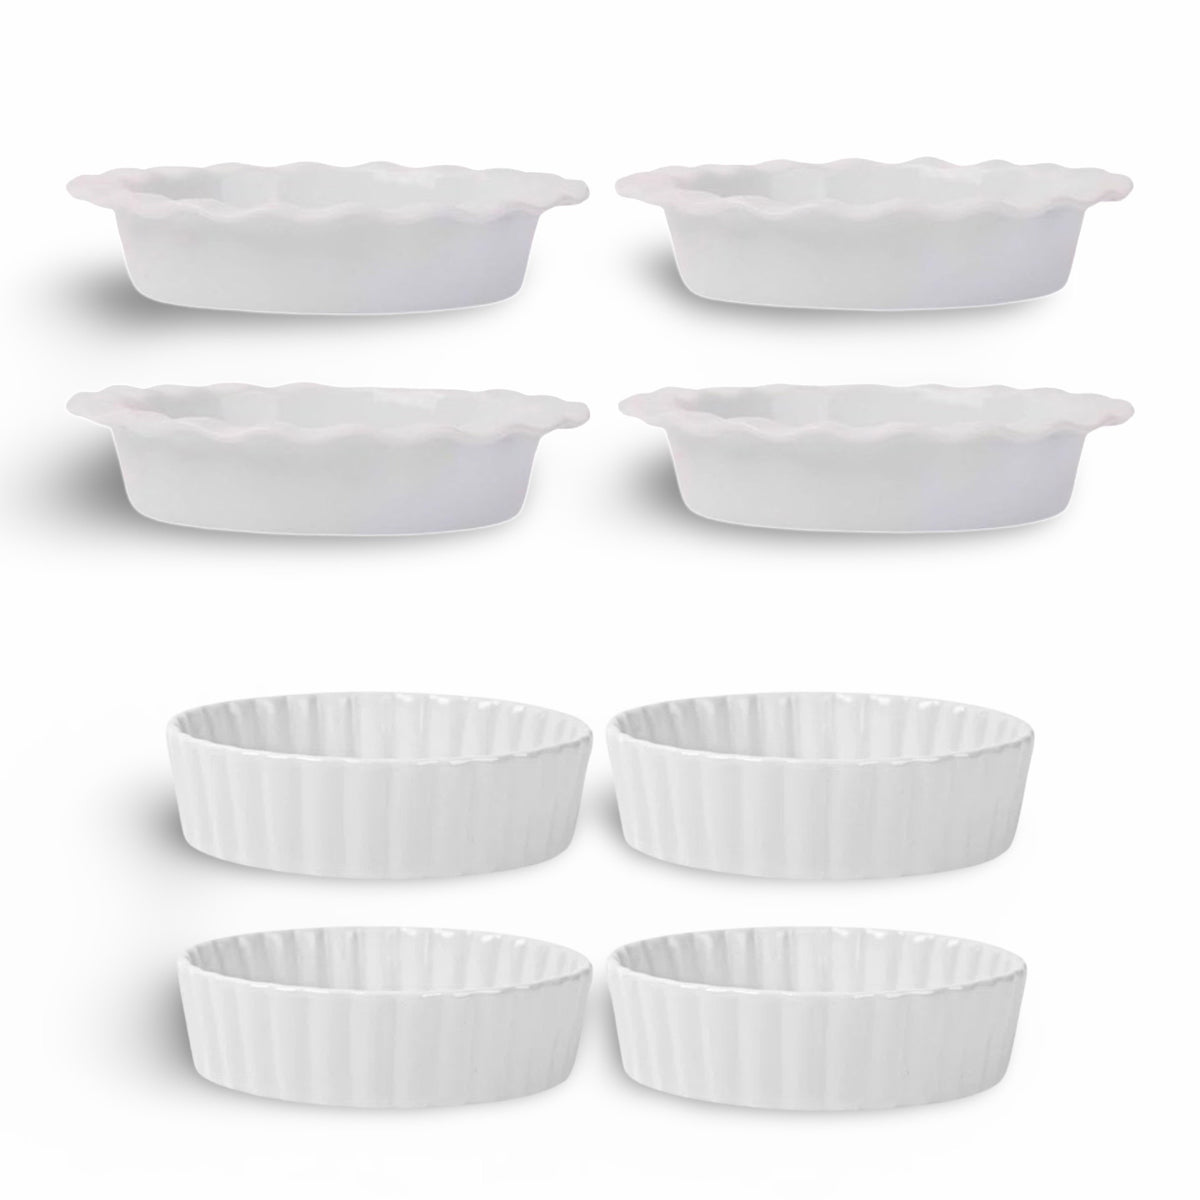 4pk Porcelain Mini 6oz Ruffled Bakers or 4oz Pie Plates- A Baking Staple